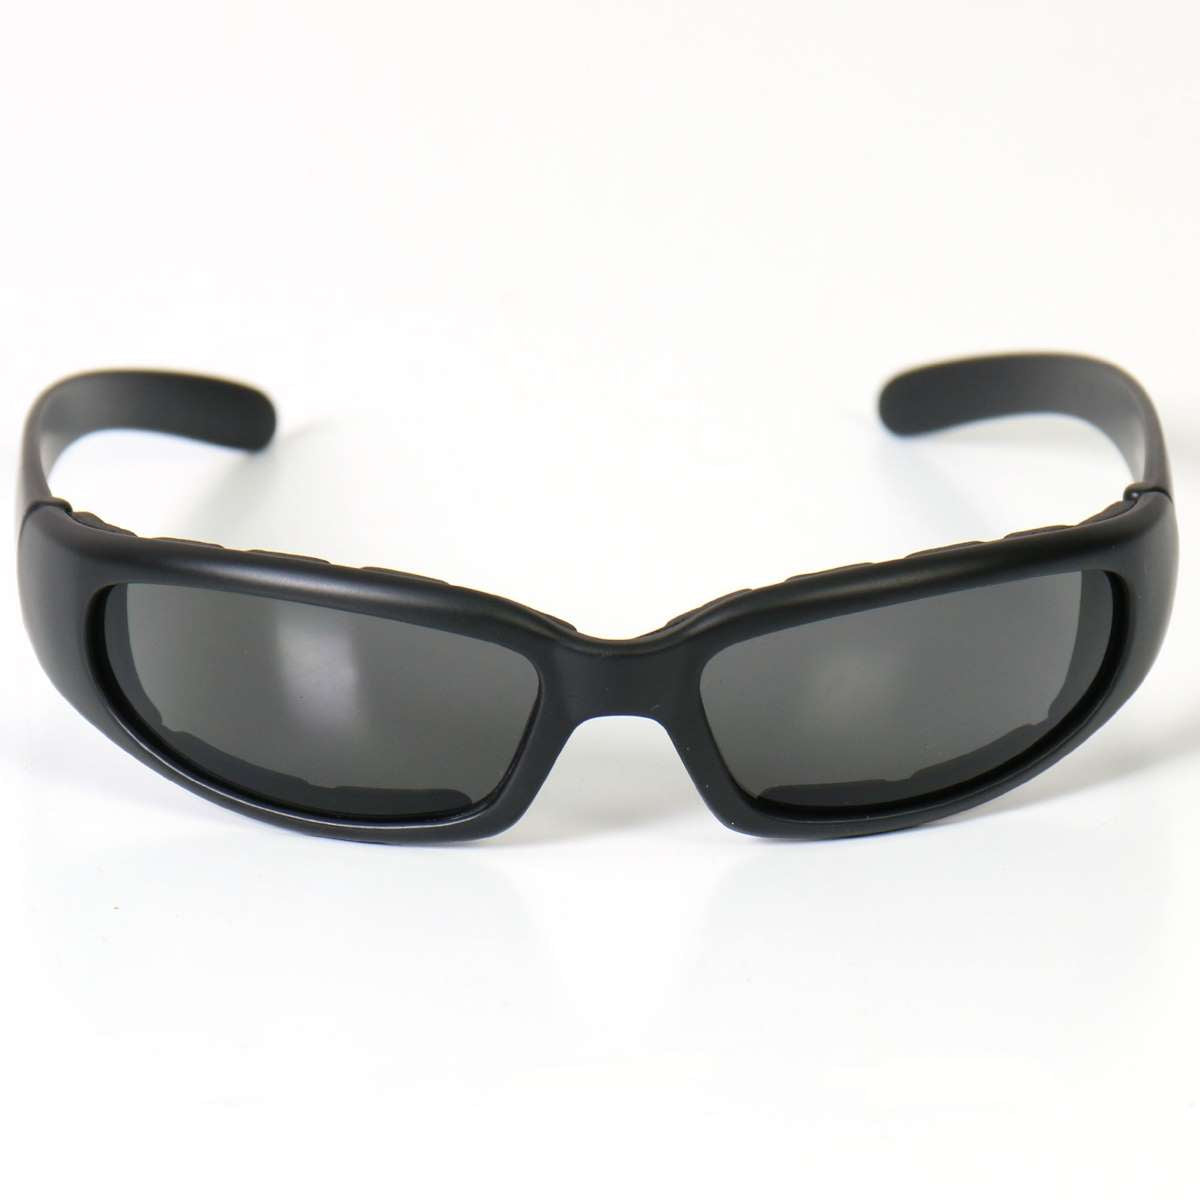 Hot Leathers Chicago Riding Sunglasses w/Smoke Lenses SGF1005